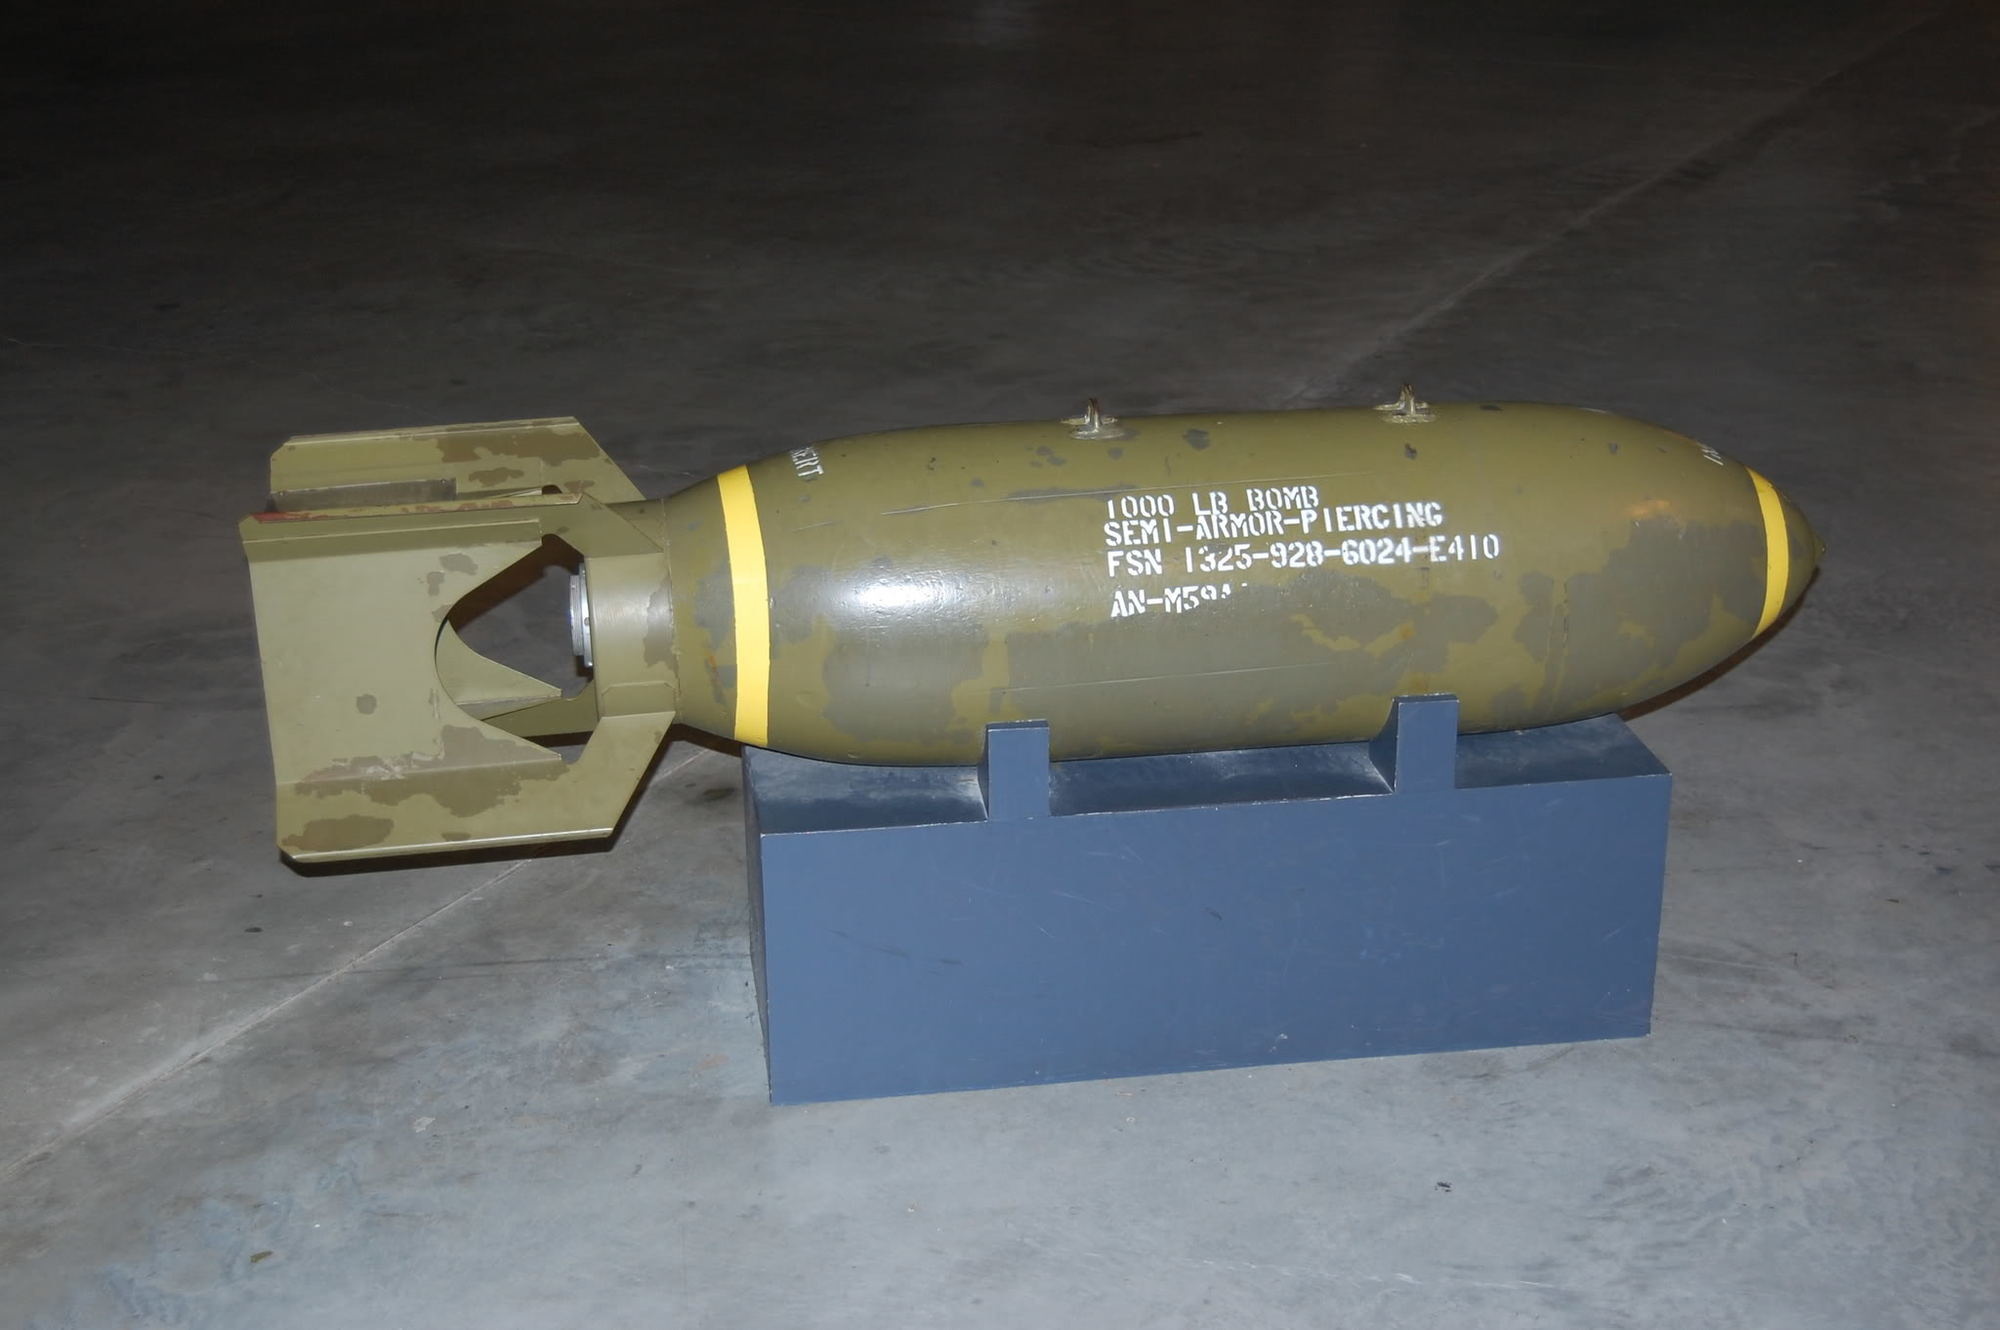 world war things - 1000 Lib Bomb SemiArmorPiercing Fsx 13259286024E410 AnM50